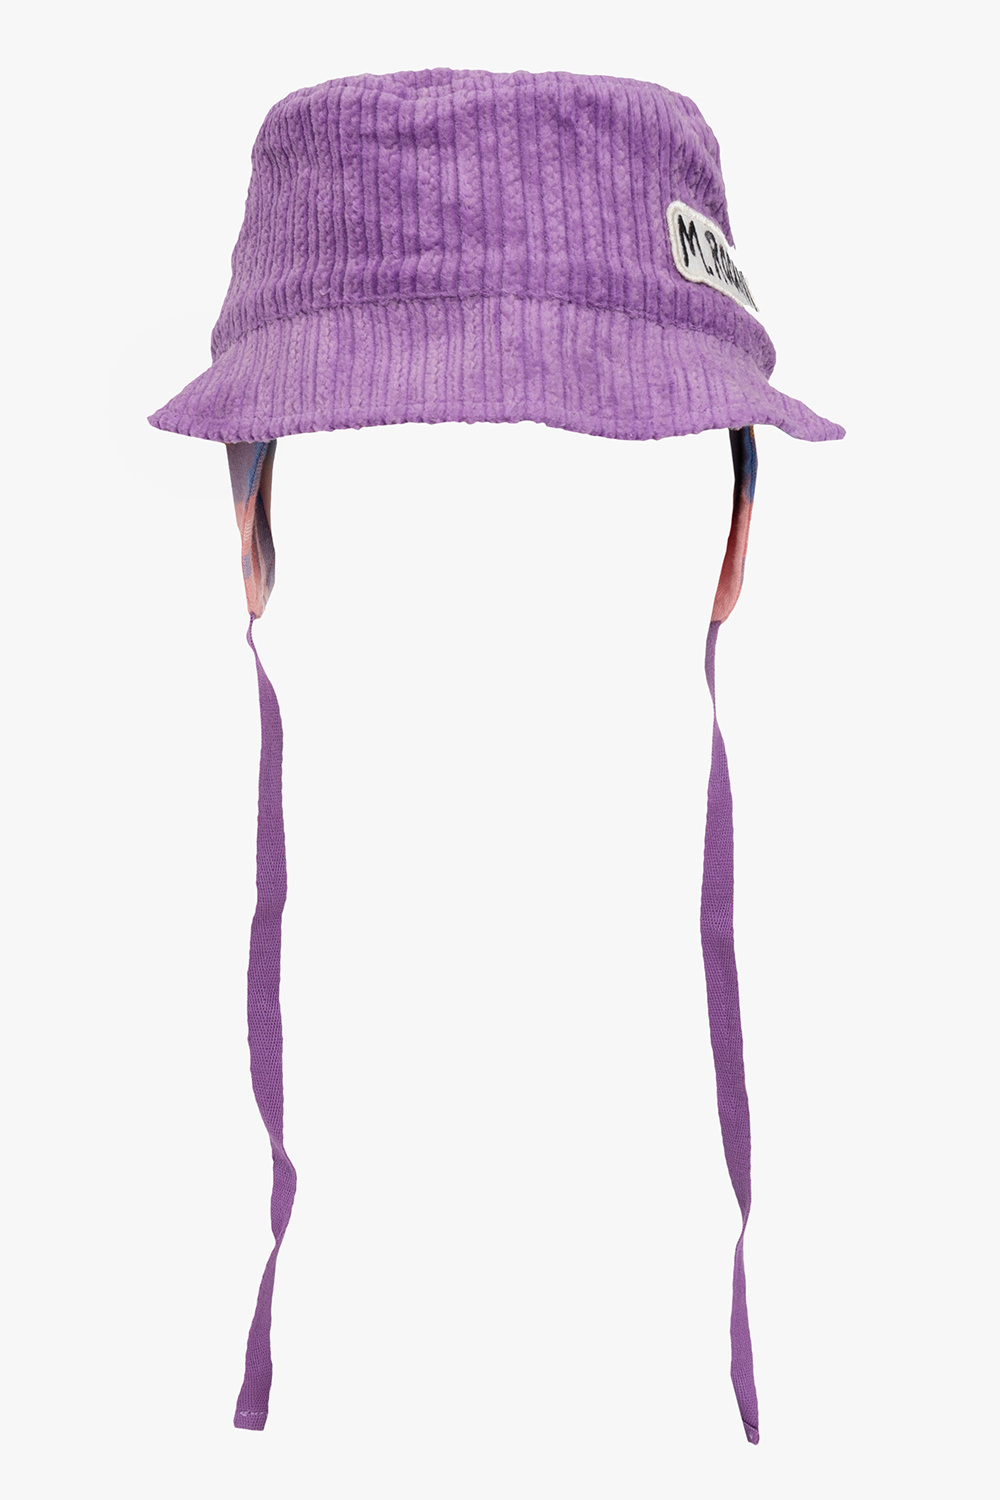 Mini Rodini For M&Co Unicorn Knitted Hat